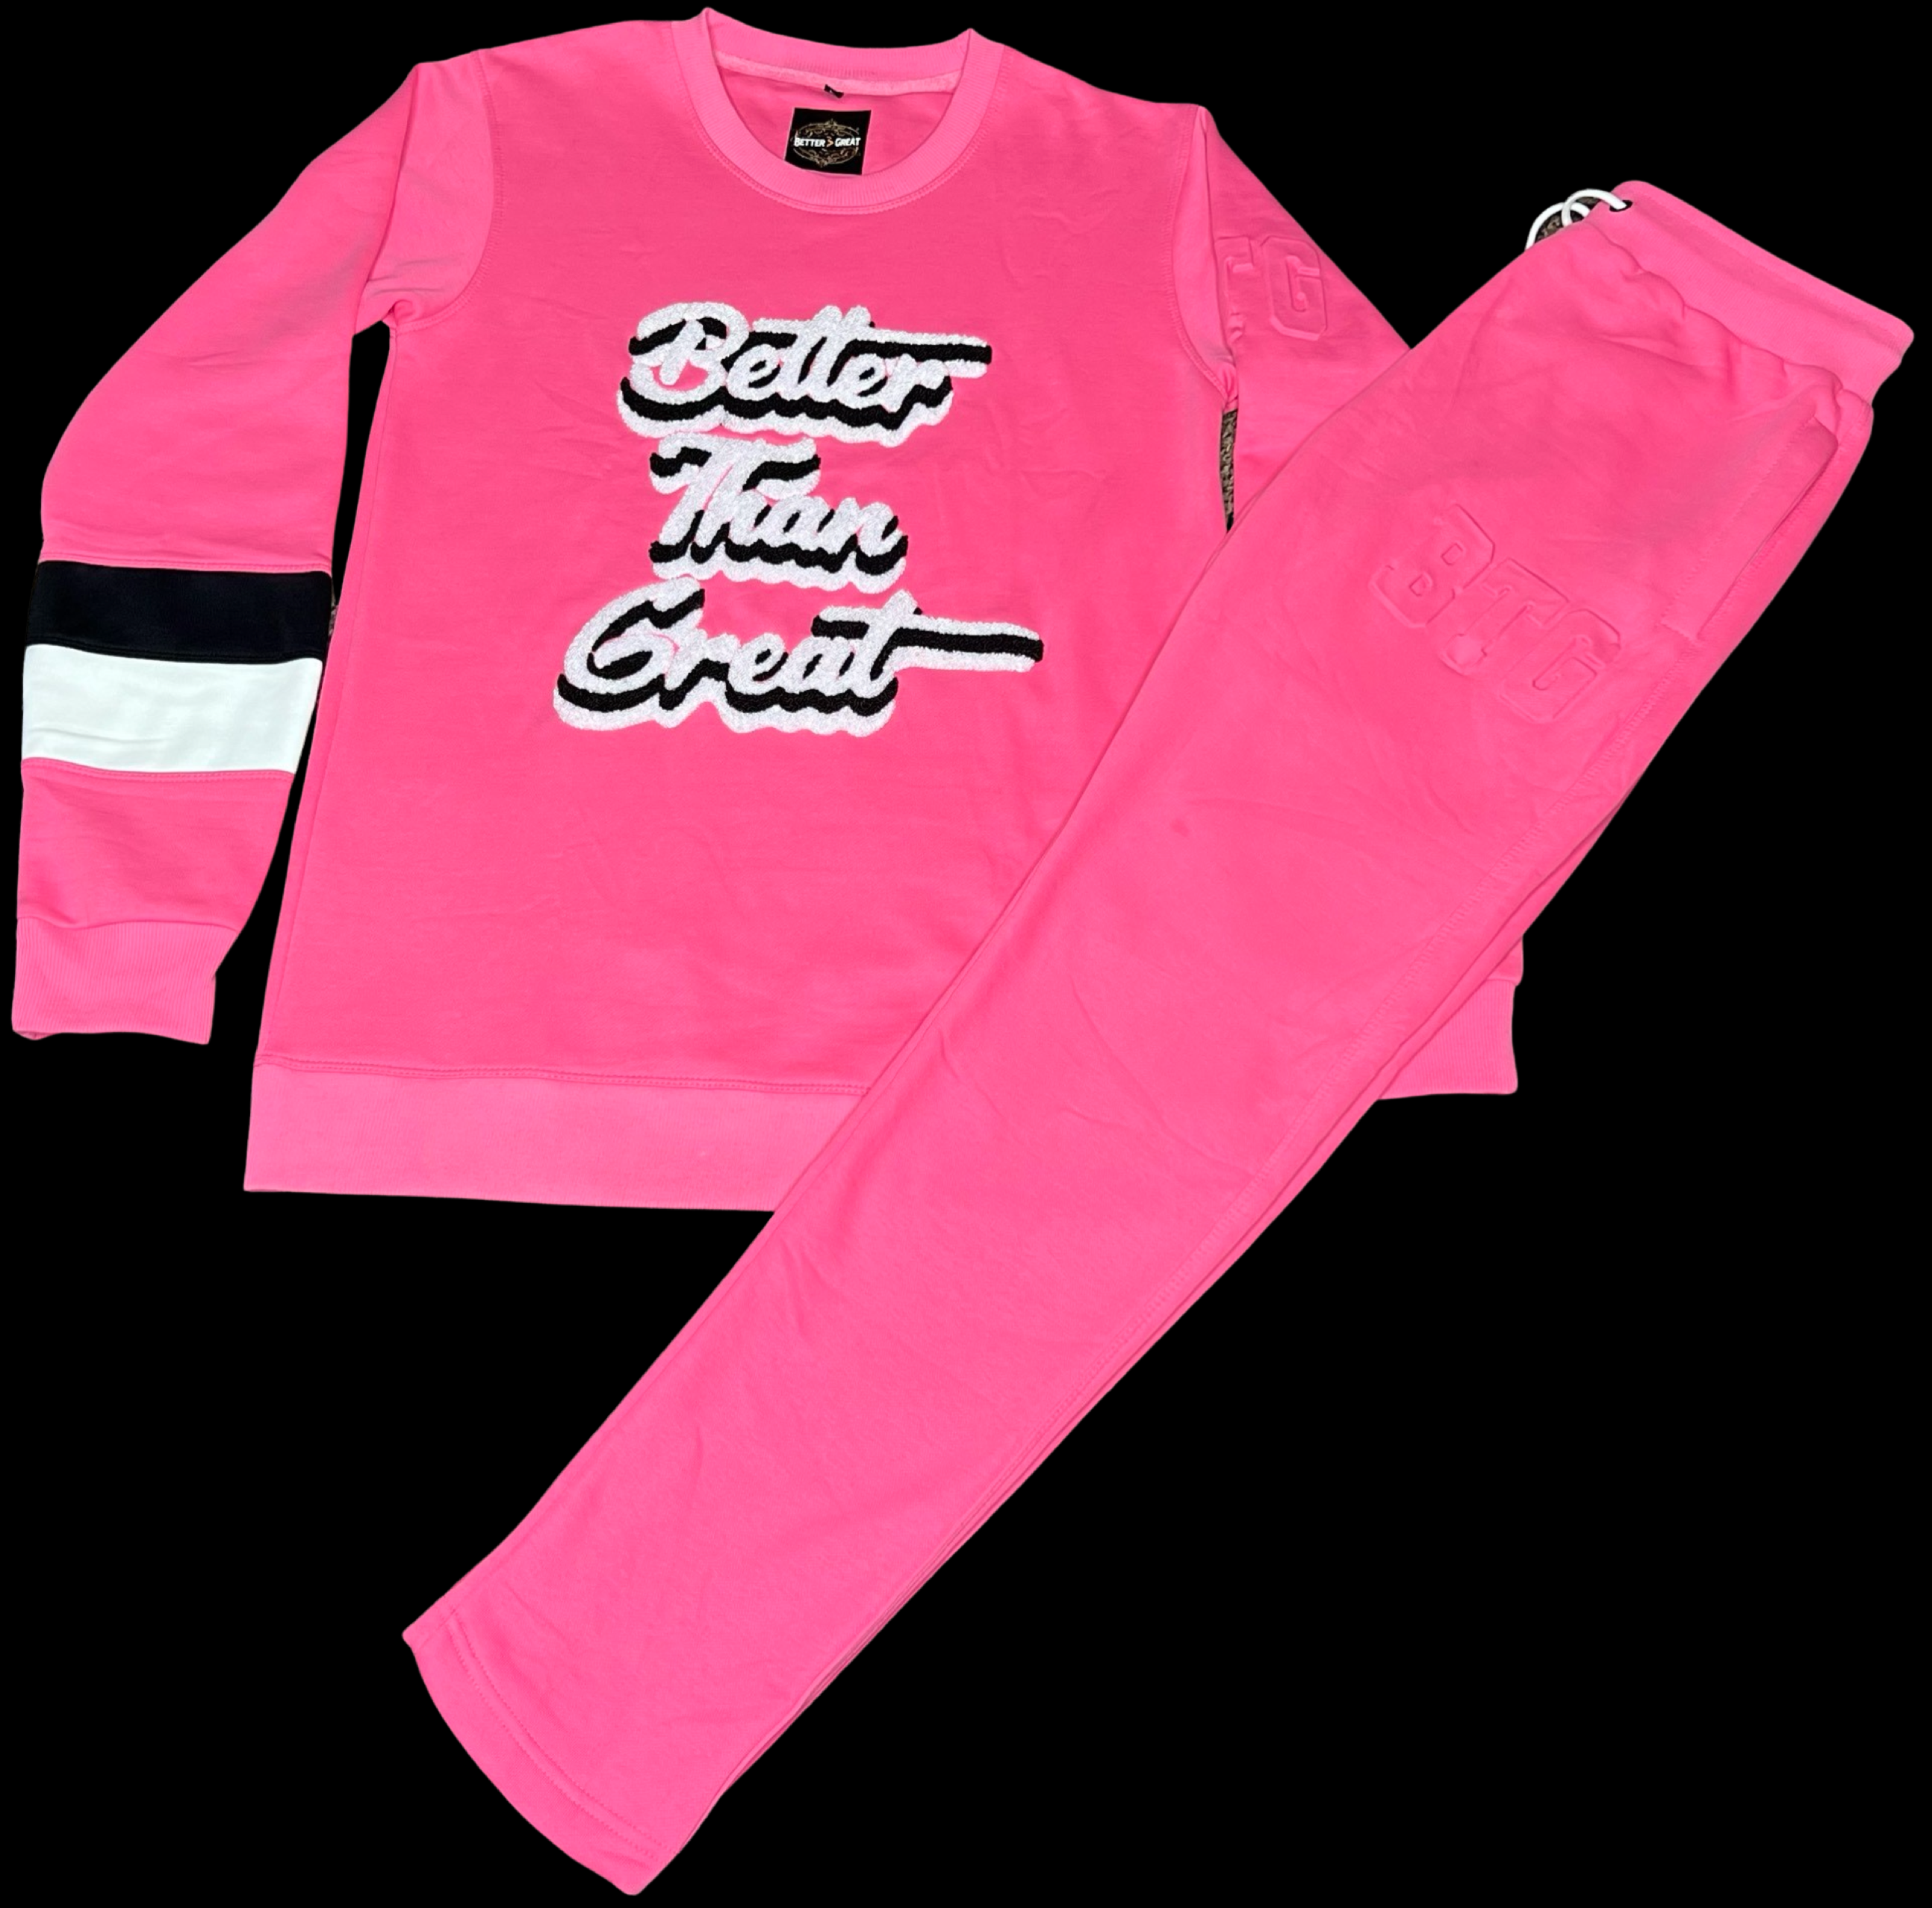 BTG Pink Crewneck Sweatsuit for men and women